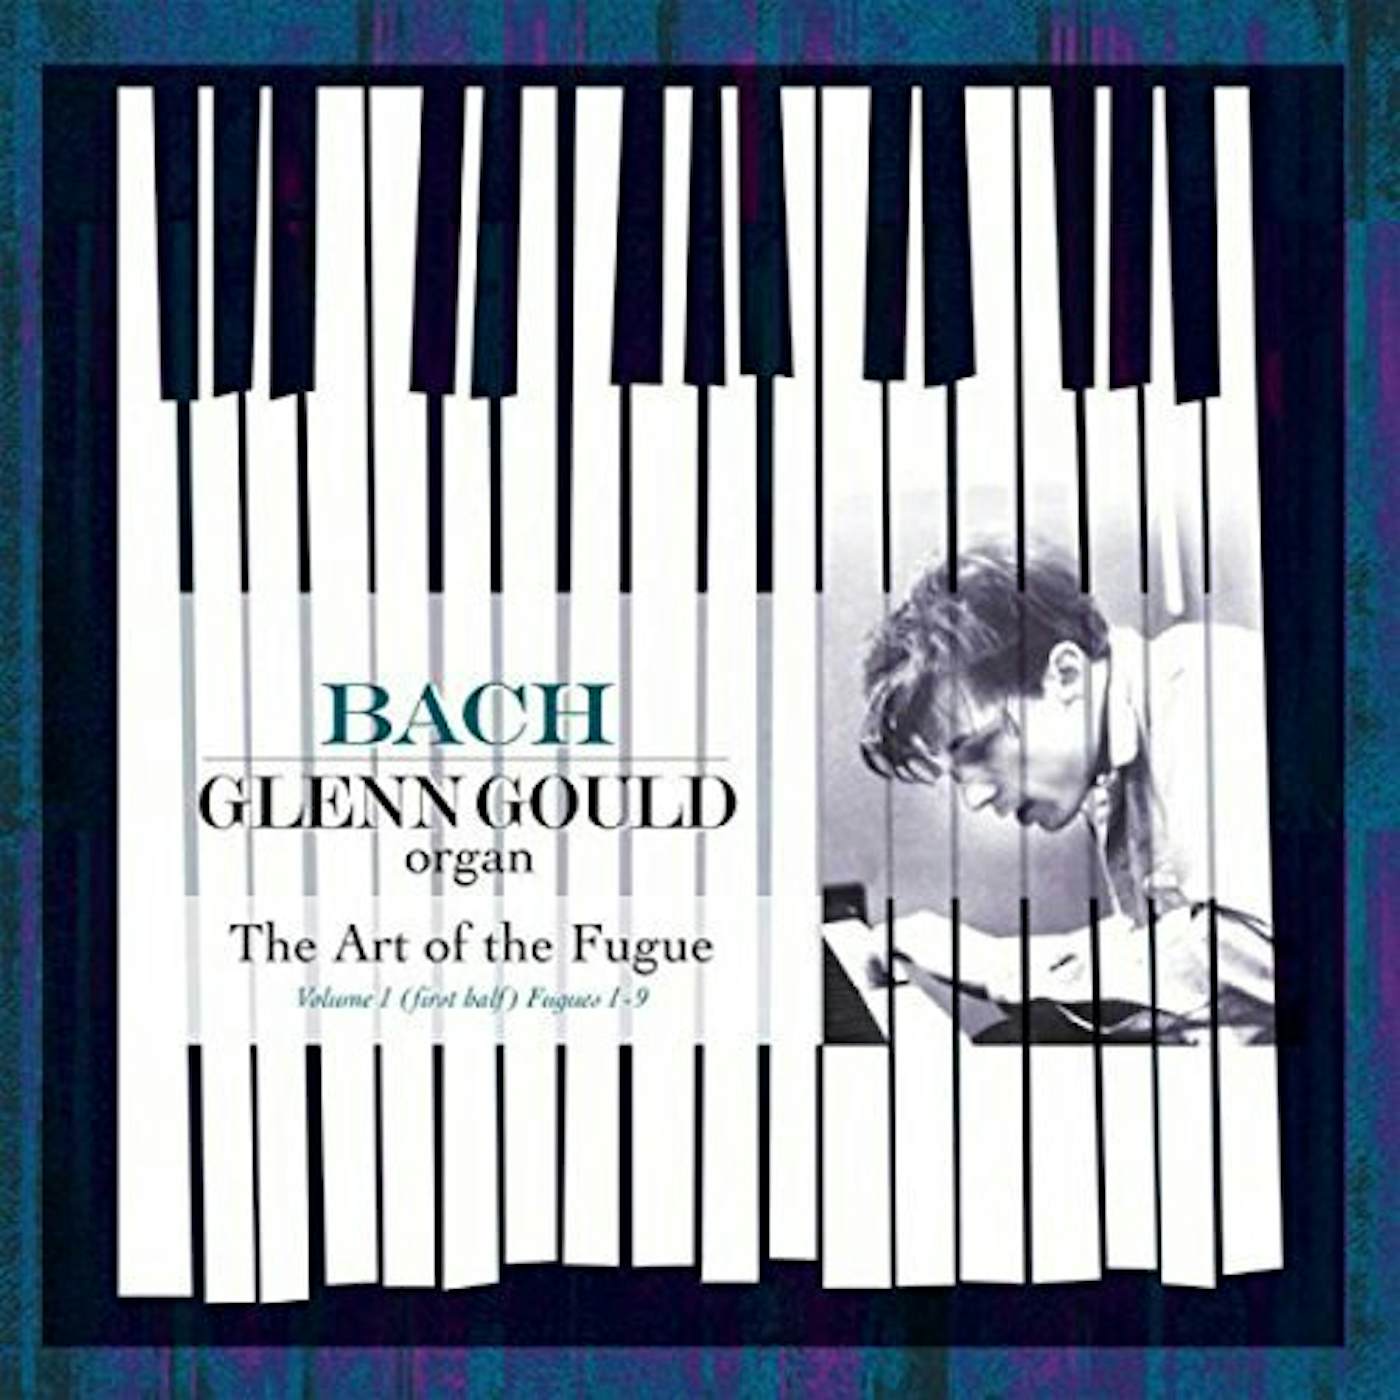 Glenn Gould ART OF THE FUGUE BWV 1080 Vinyl Record